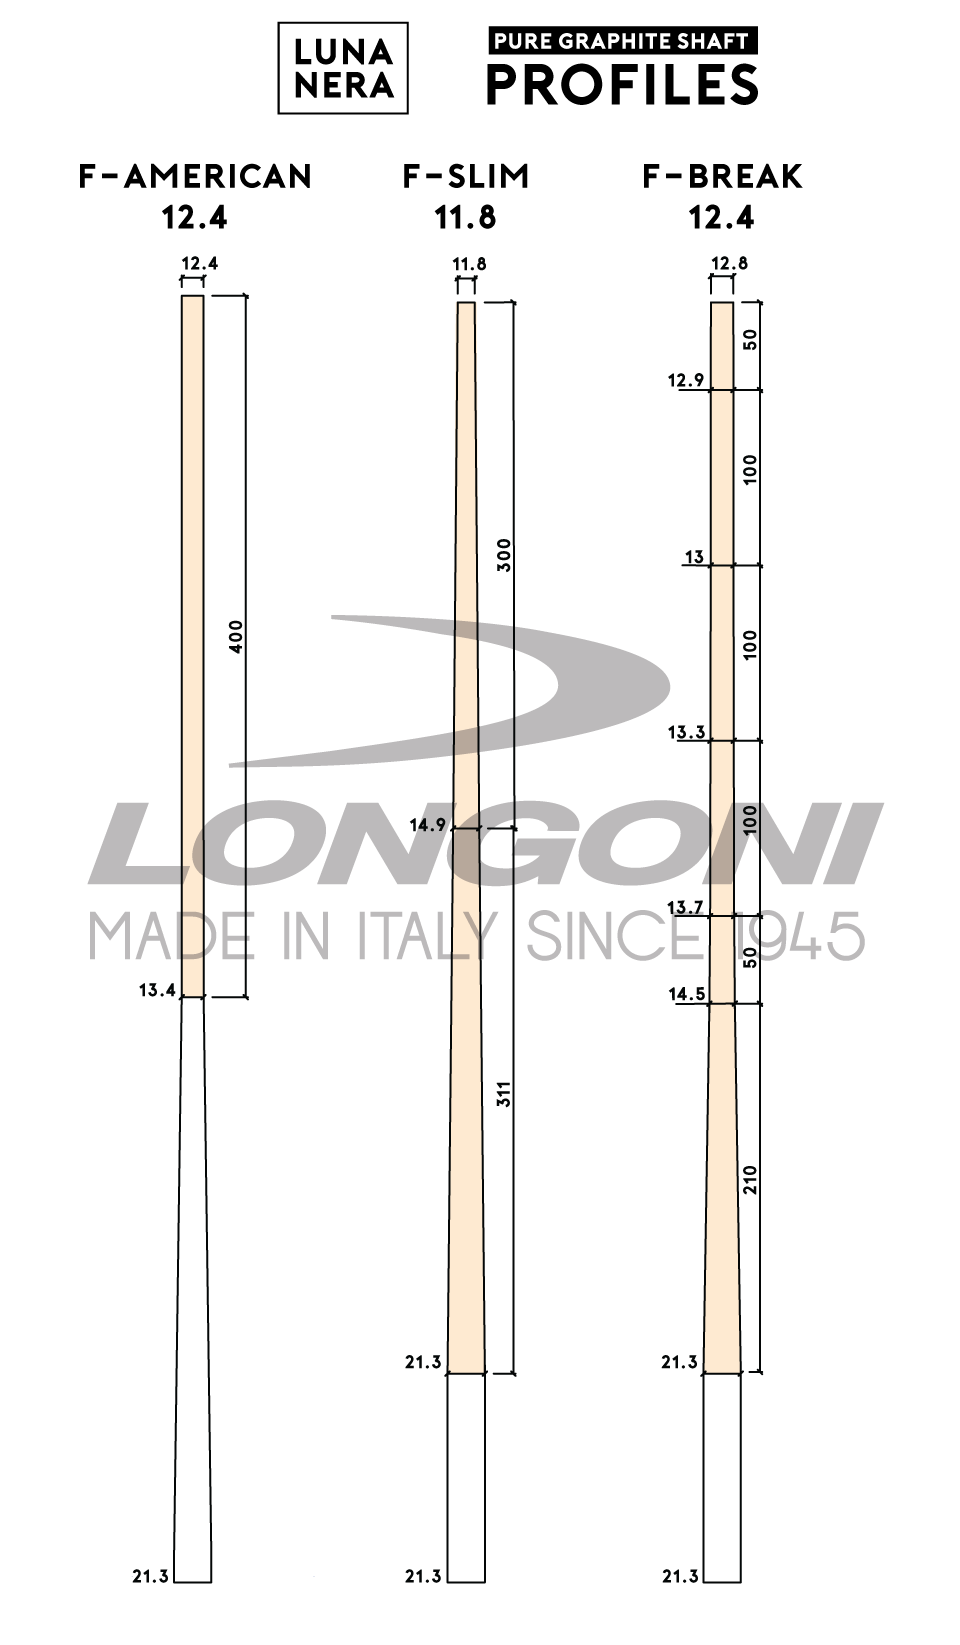 Longoni pool shafts 2018 range profile